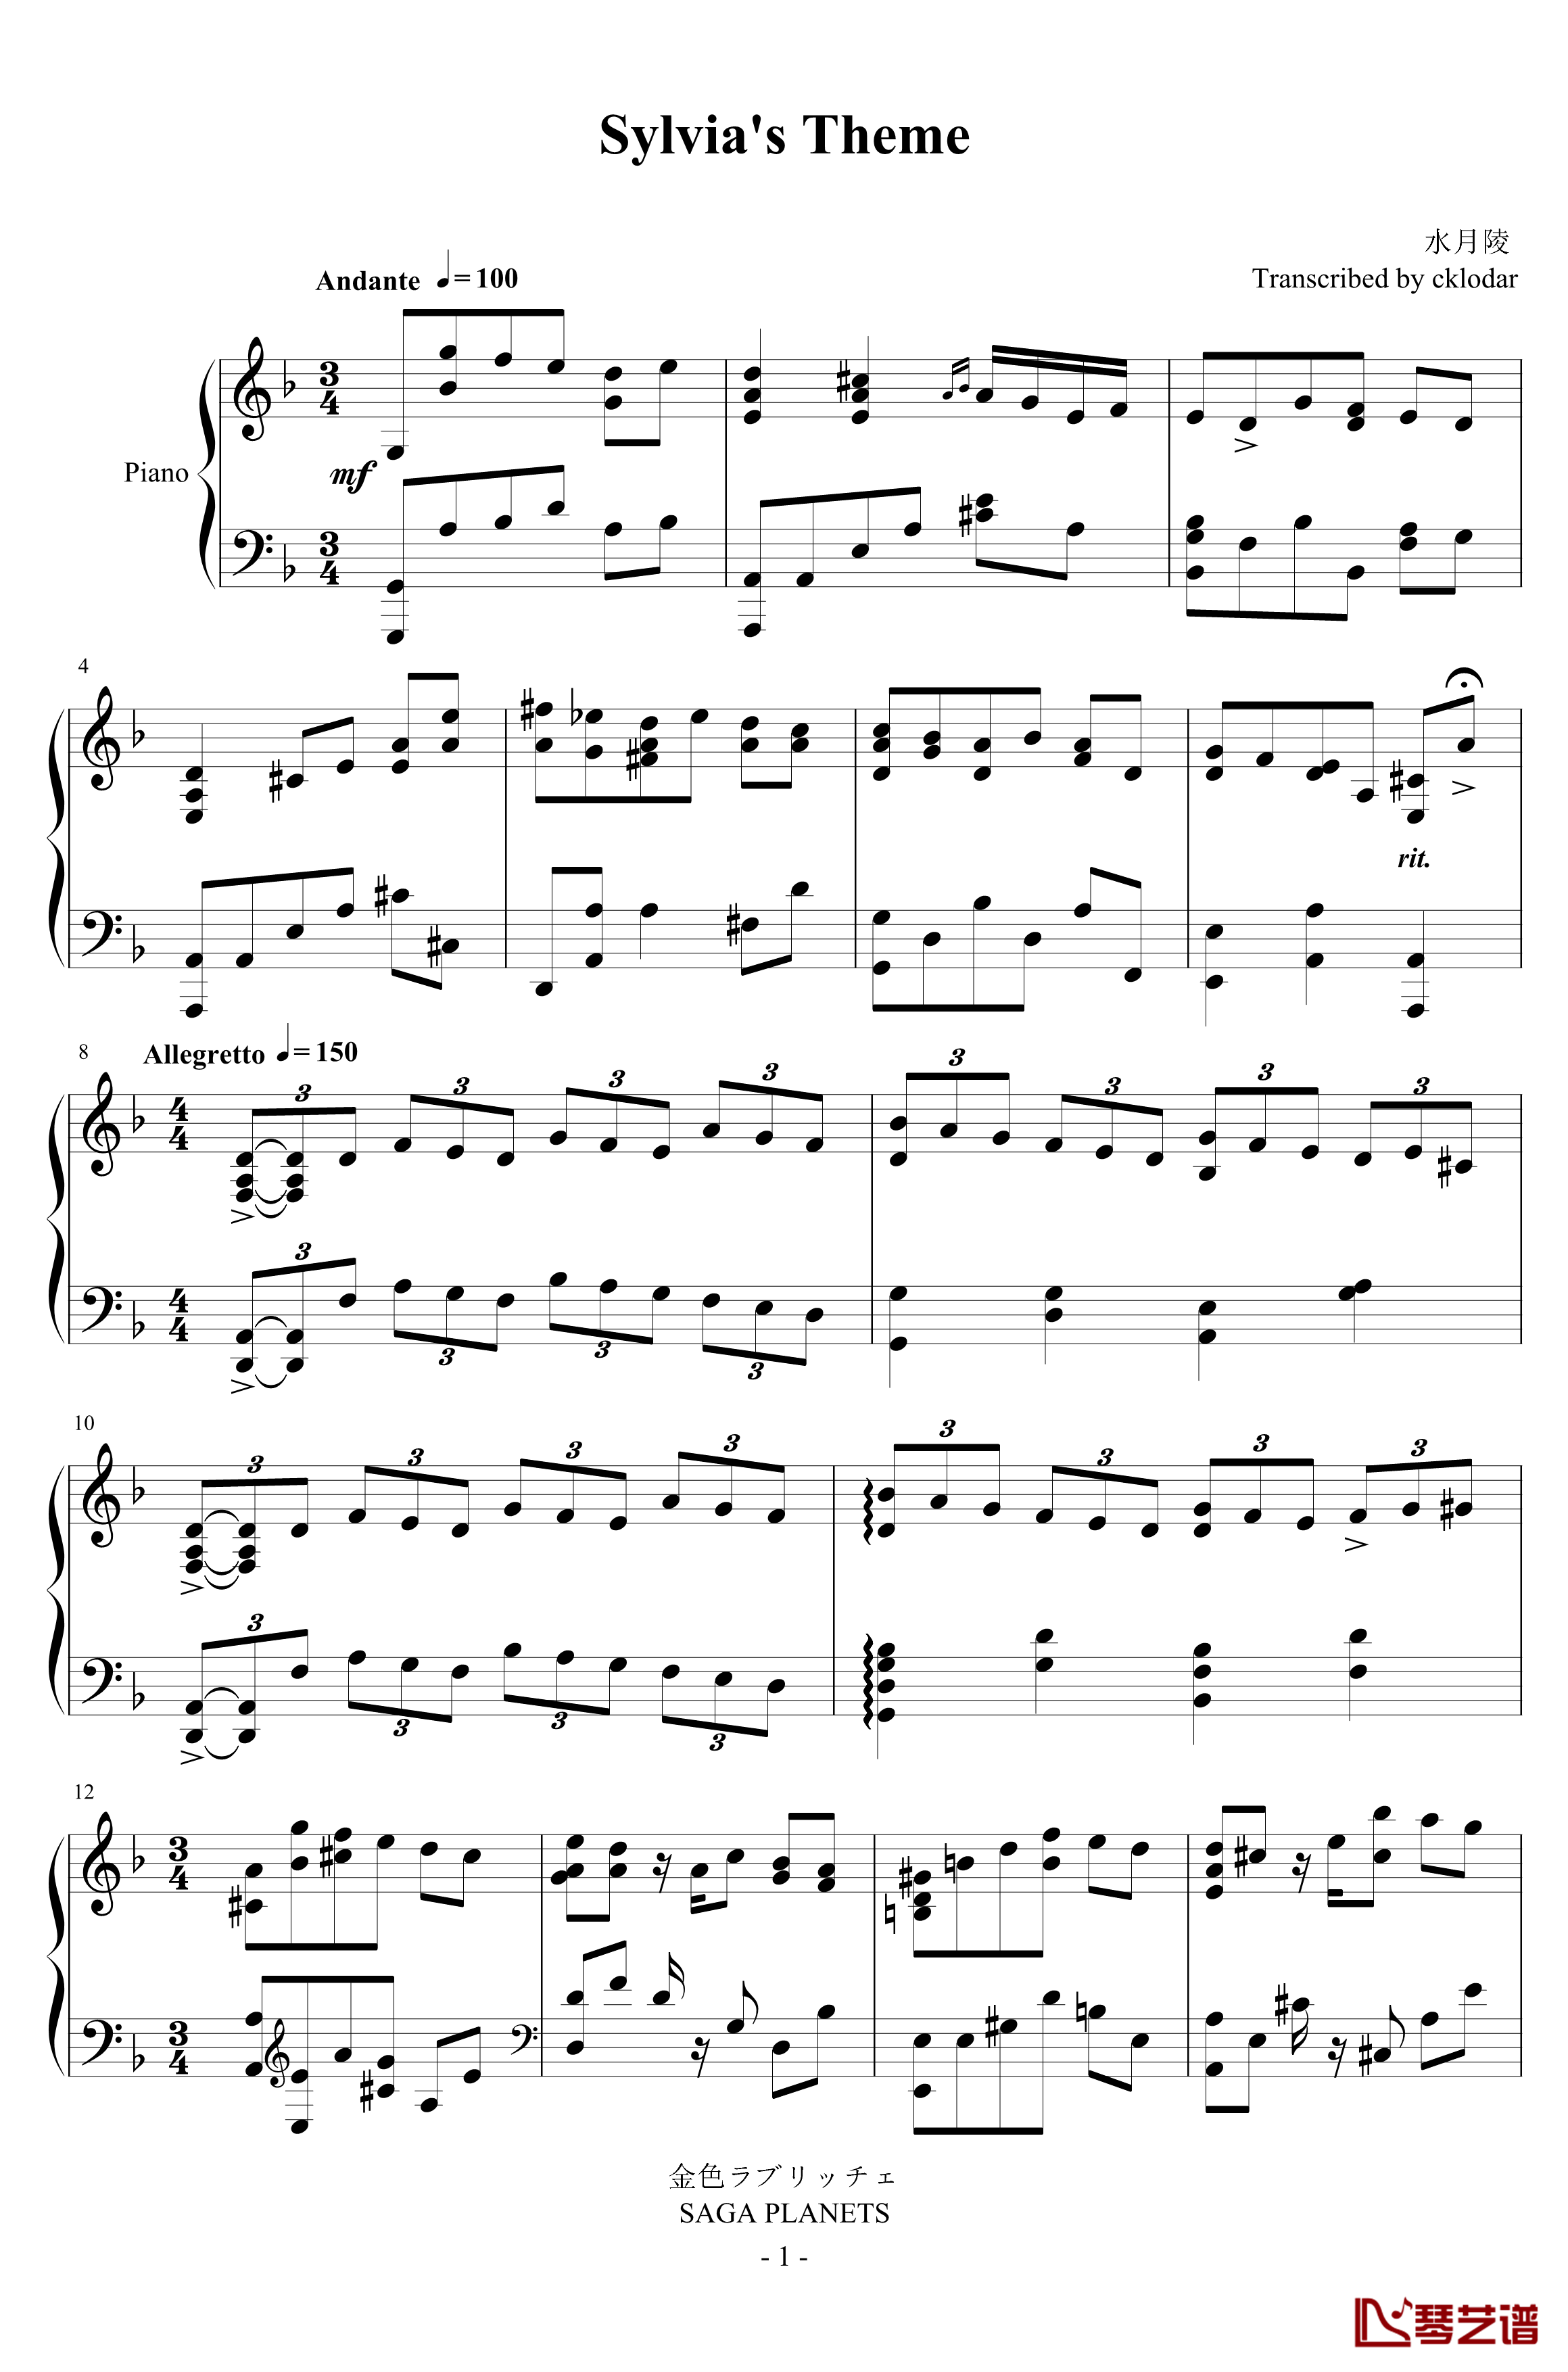 Sylvia's Theme钢琴谱-水月陵1